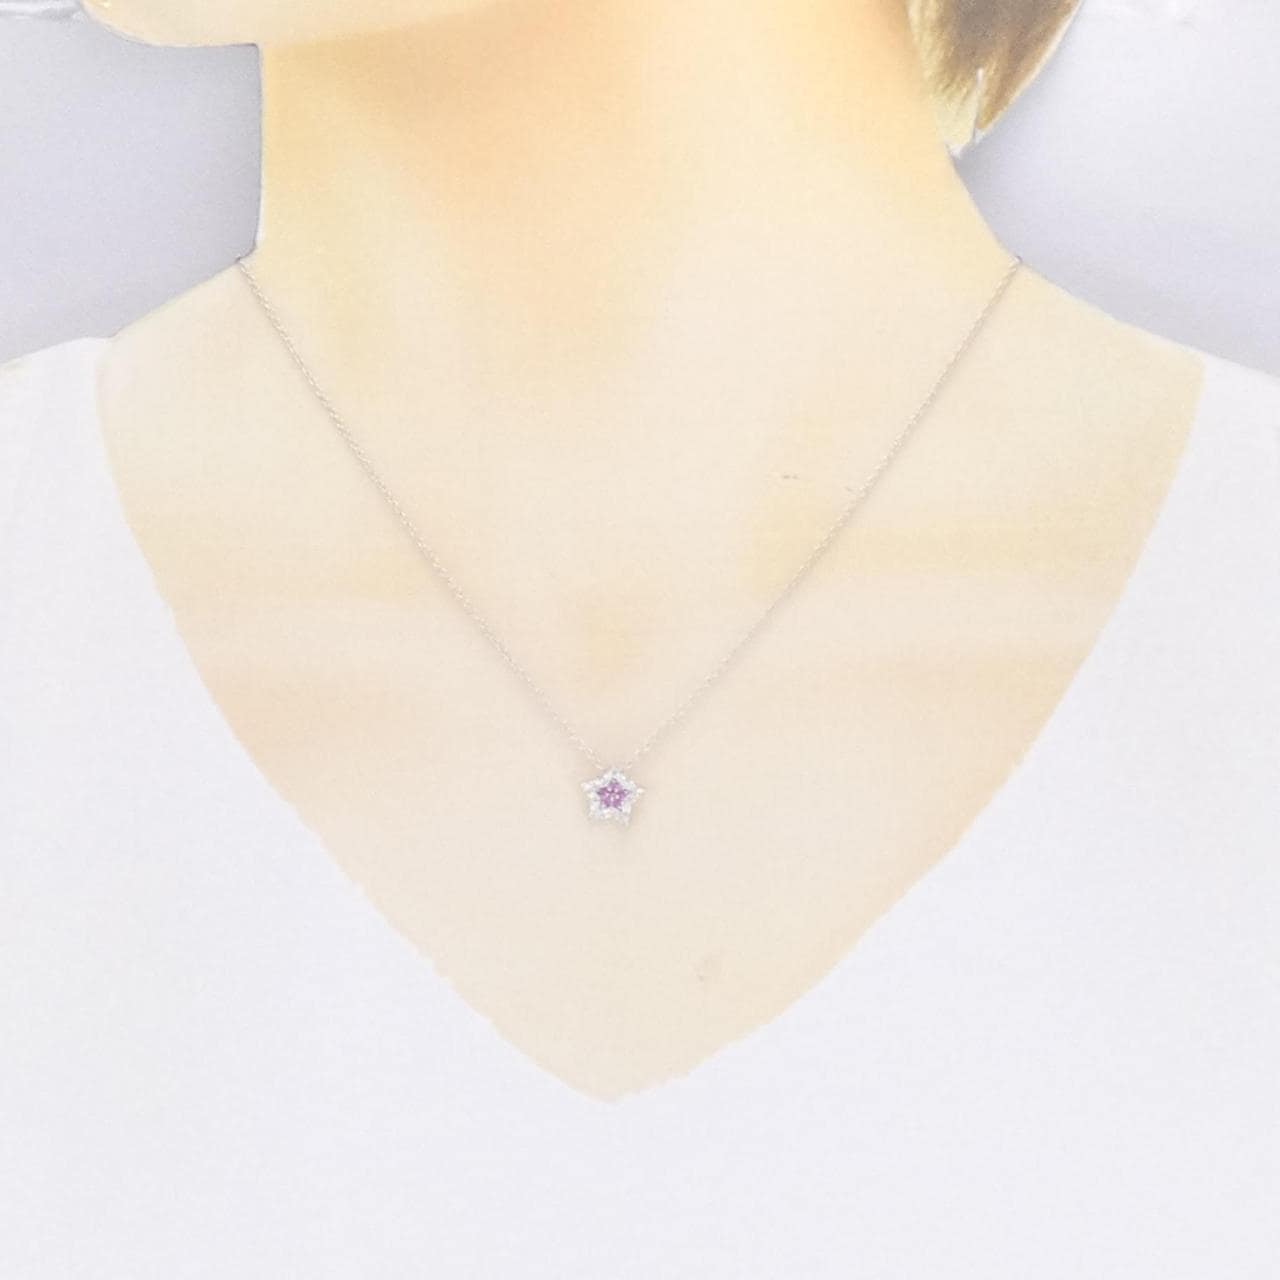 PONTE VECCHIO Star Sapphire Necklace 0.09CT